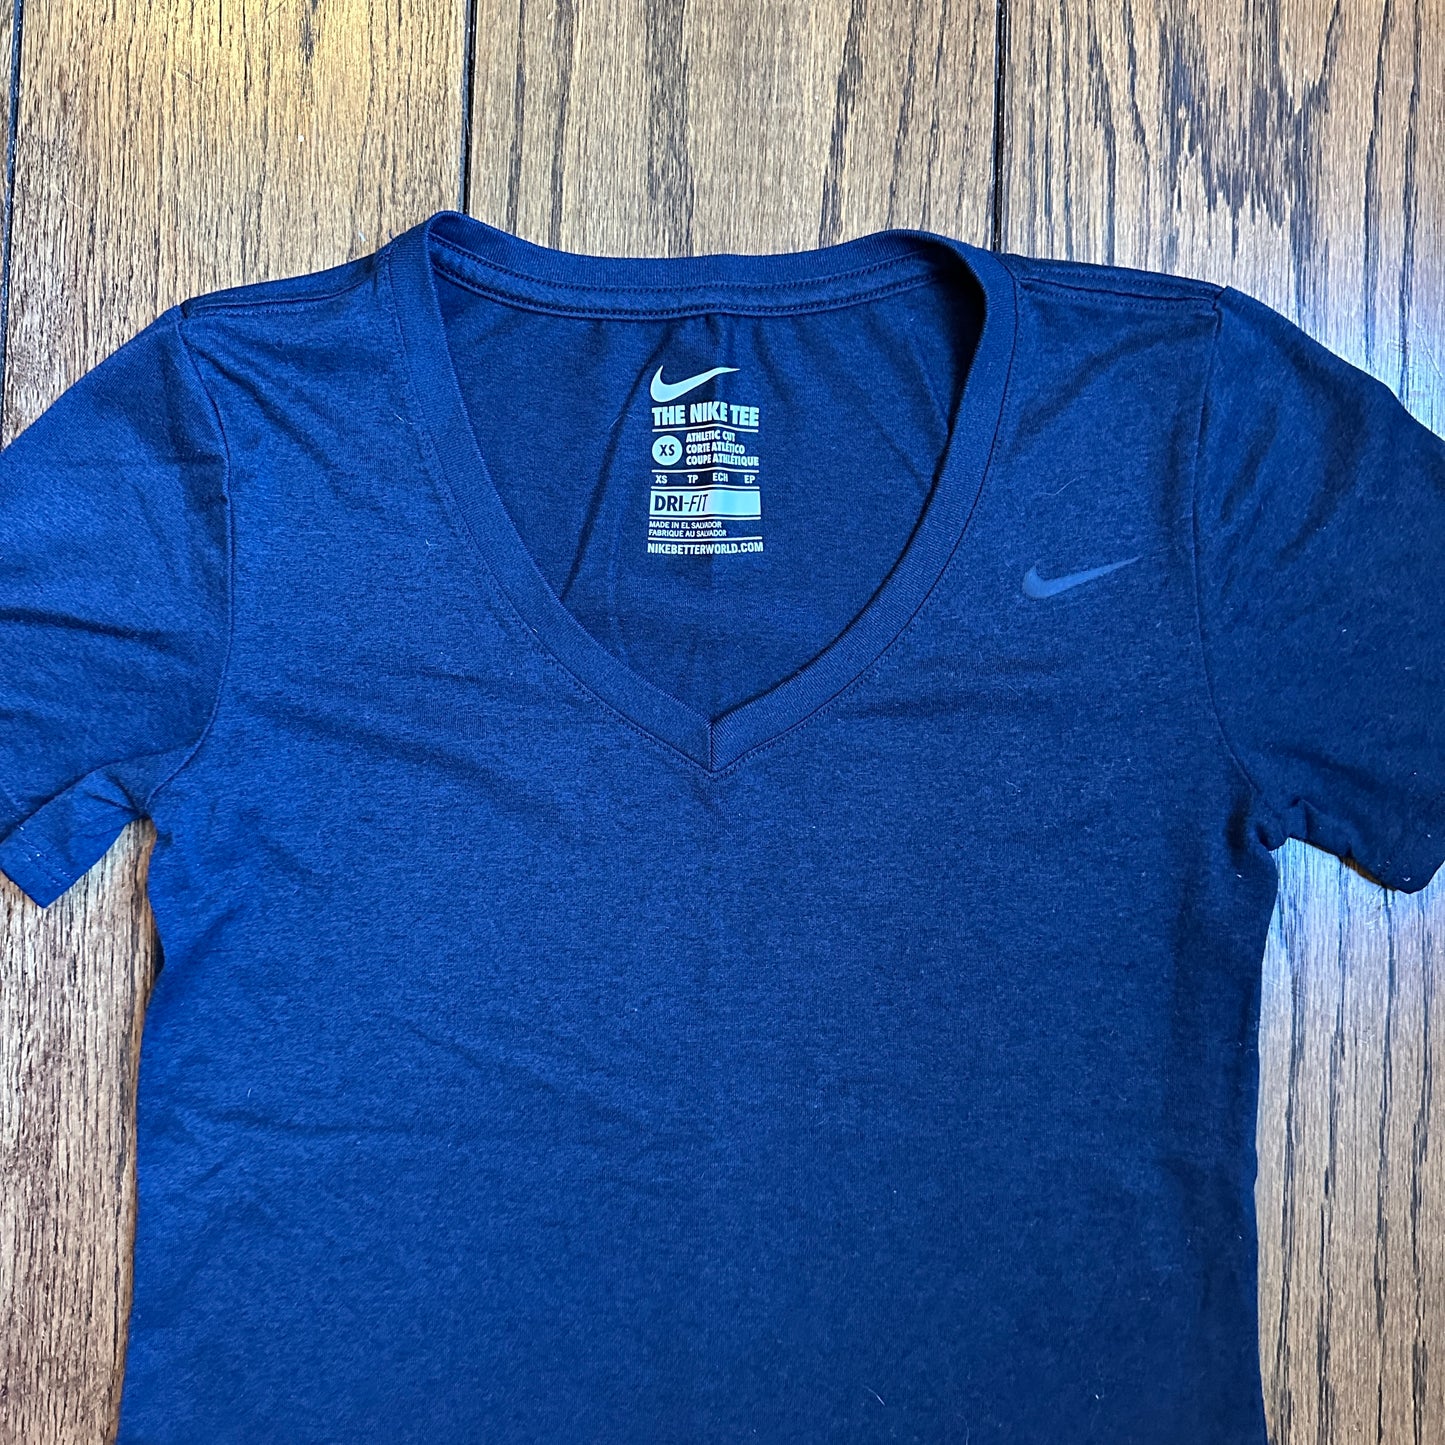 Women's Nike Dri Fit Running Workout V-neck Short Sleeve Shirt, Navy - size XS